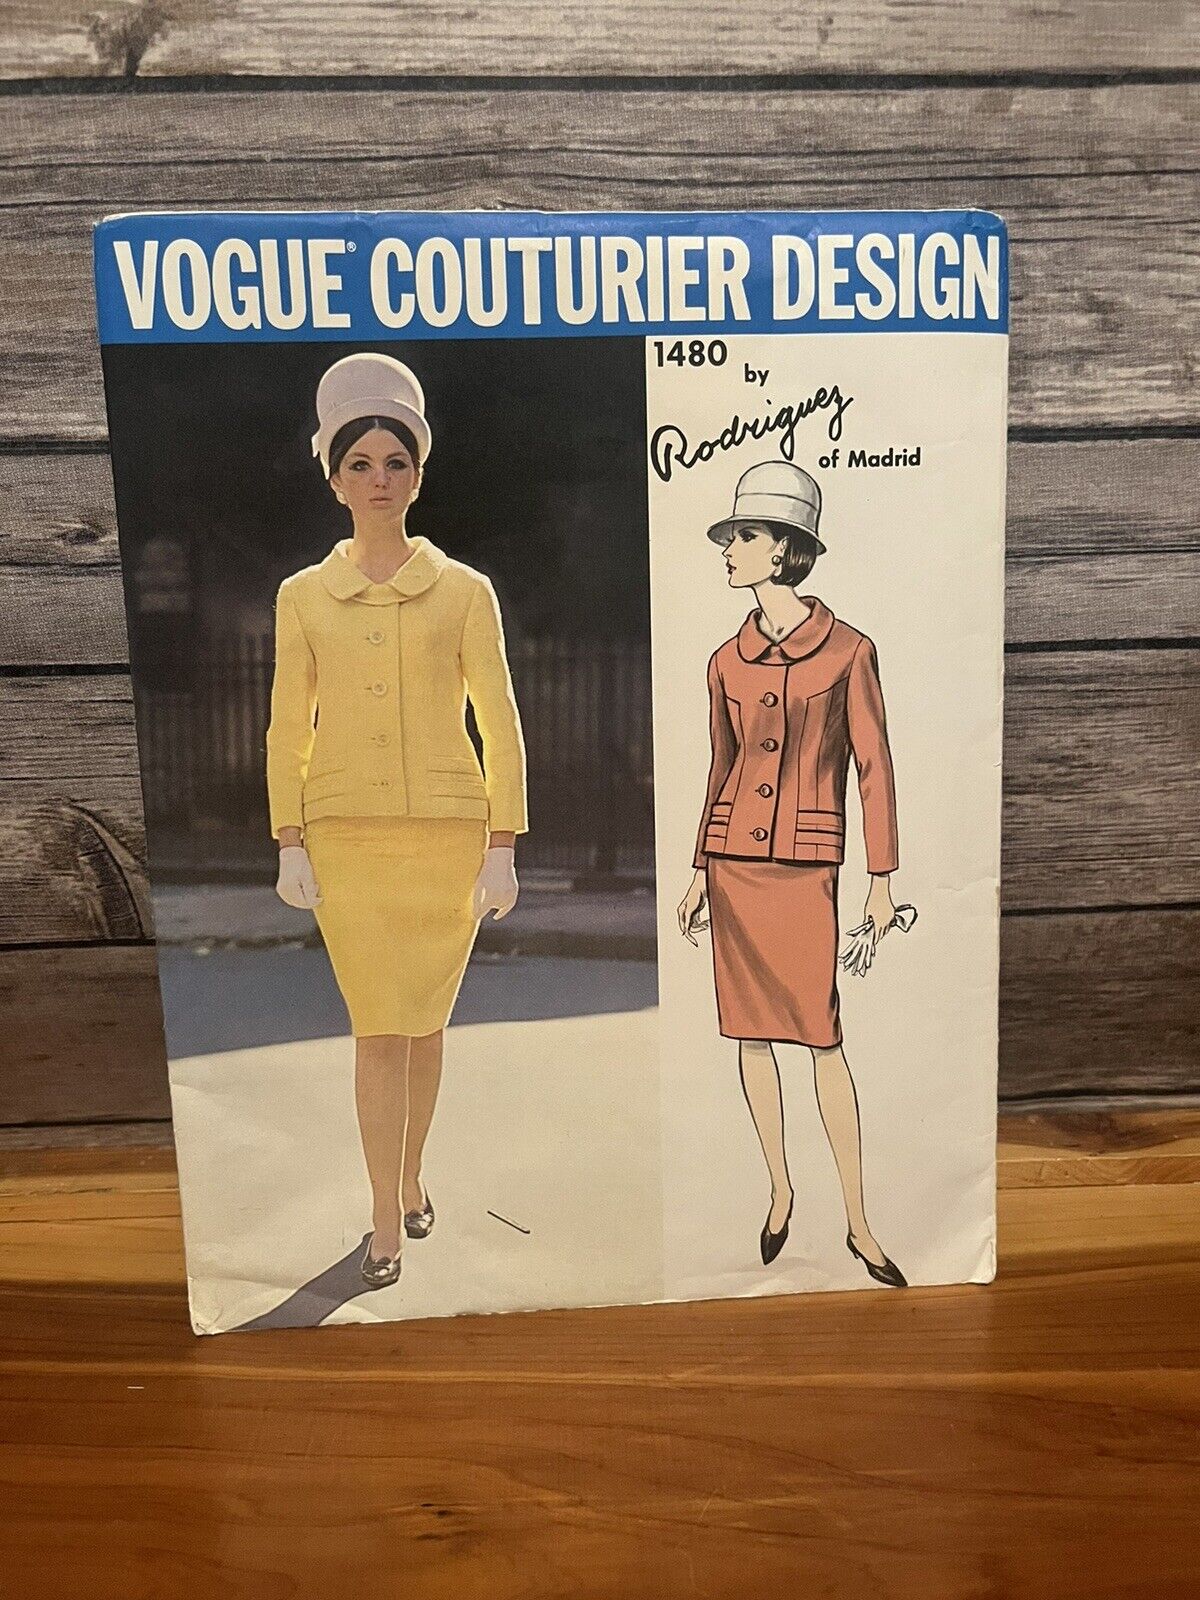 *RARE* Vintage VOGUE COUTURIER DESIGN No. 1480 by Rodriguez of Madrid Suit